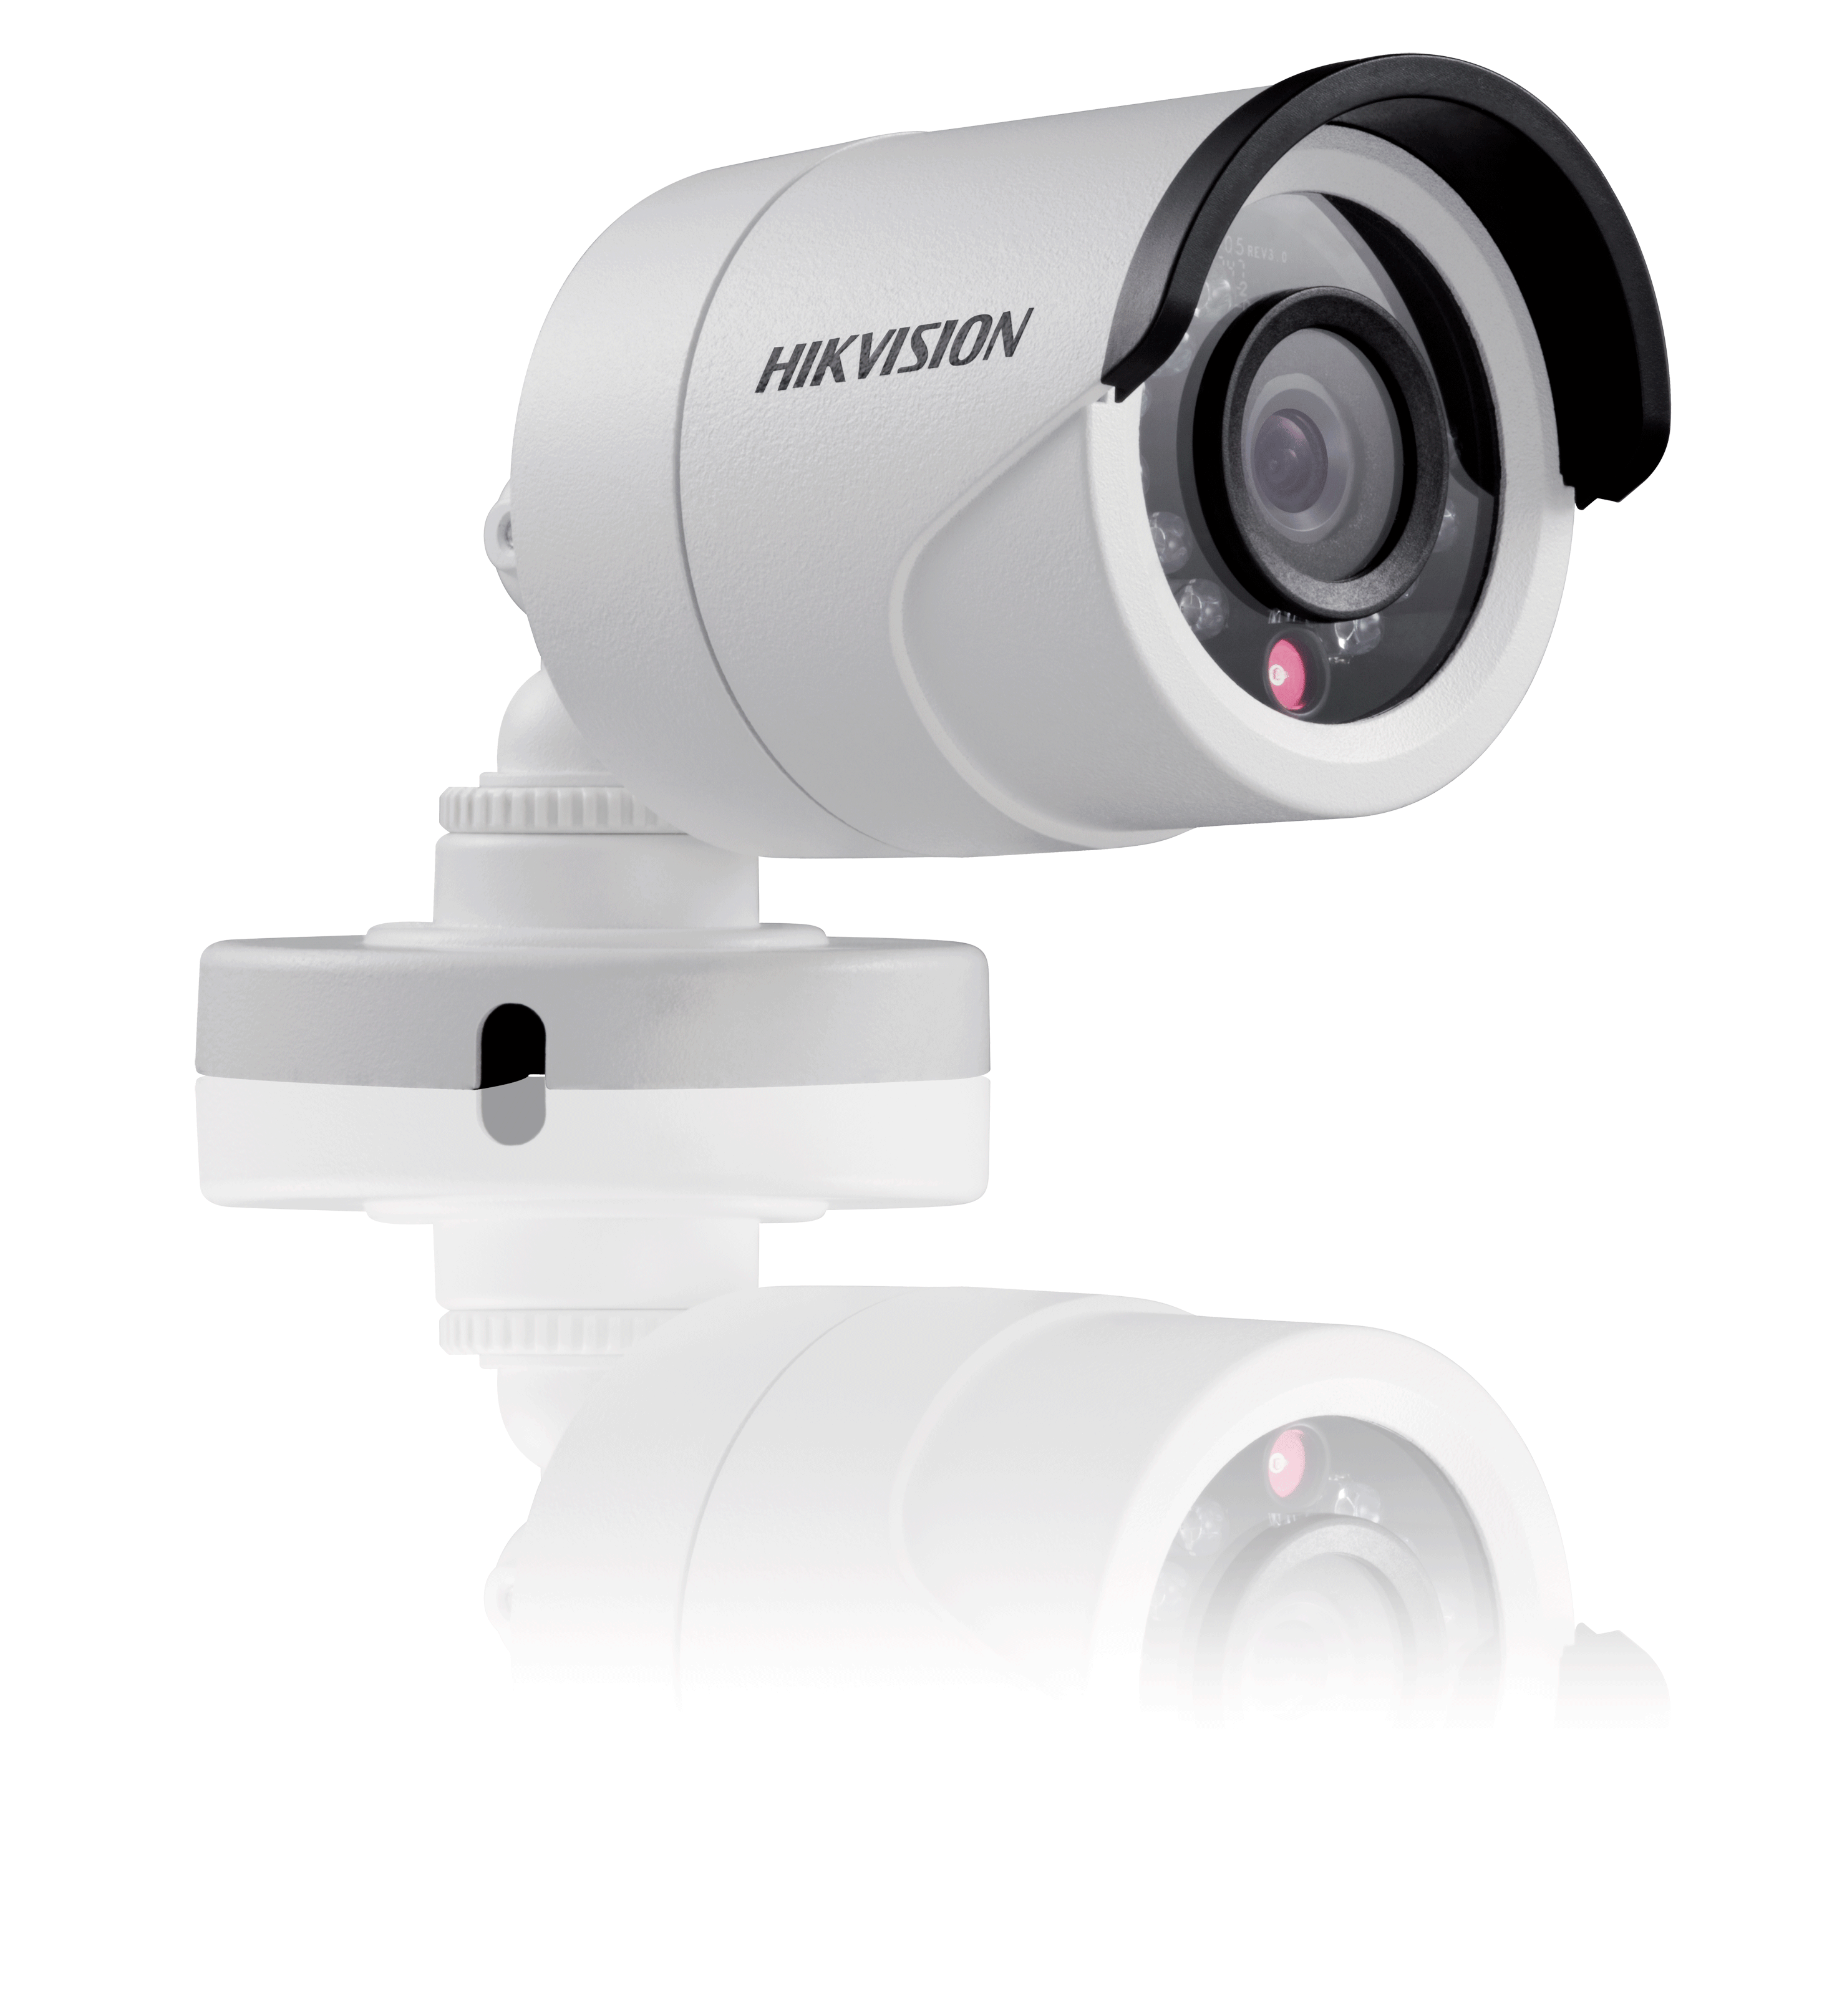 Camara CCTV Tipo Bala 1MP Hikvision DS2CE16C0TIR | HD 720p, 1/4'' CMOS, Lente 3.6mm, IR 20mts, 0.01Lux, Dia/Noche, Seguridad IP66, DNR, Garantía 1 Año